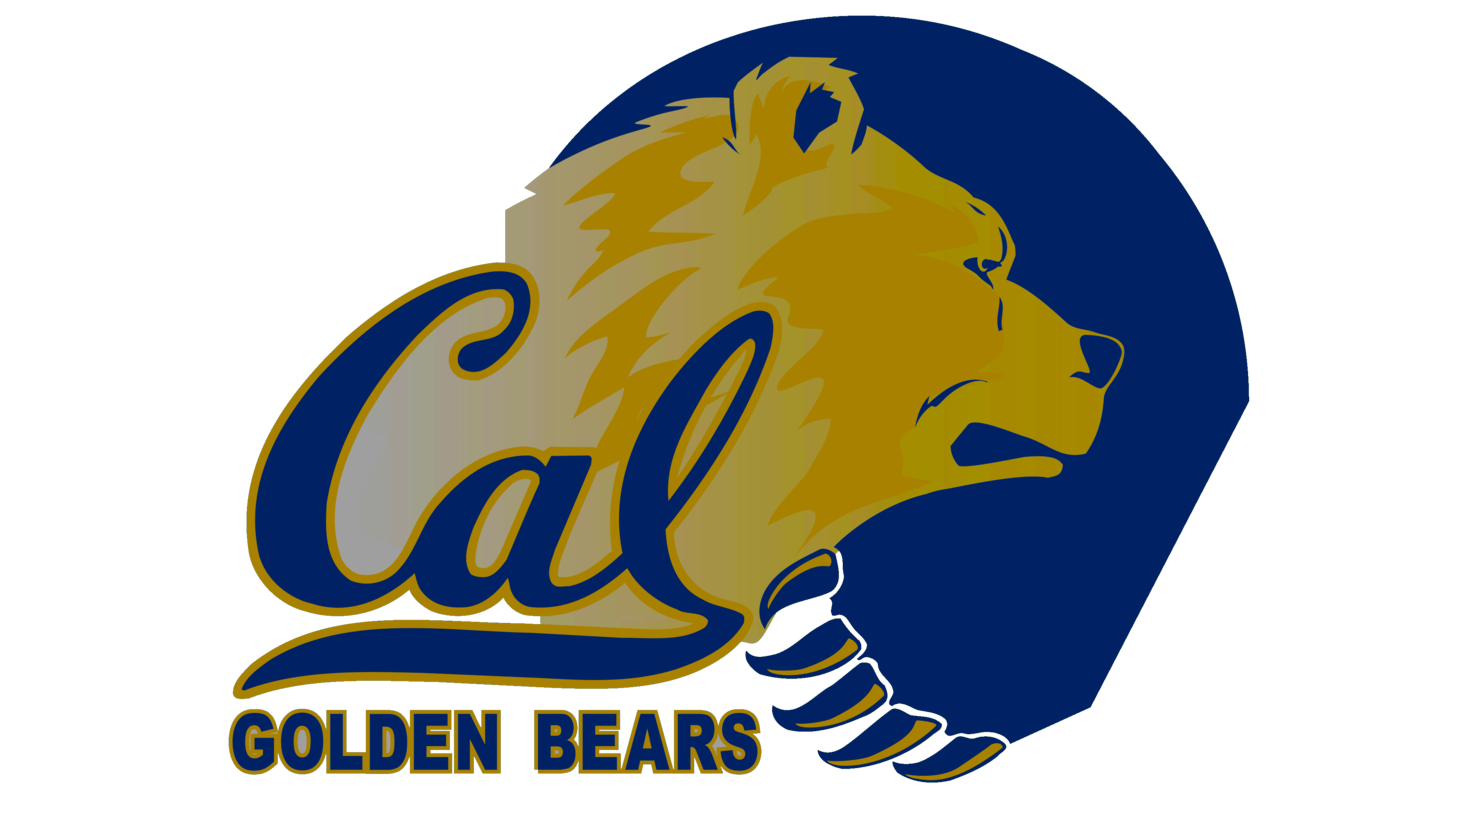 California golden bears sign 1992